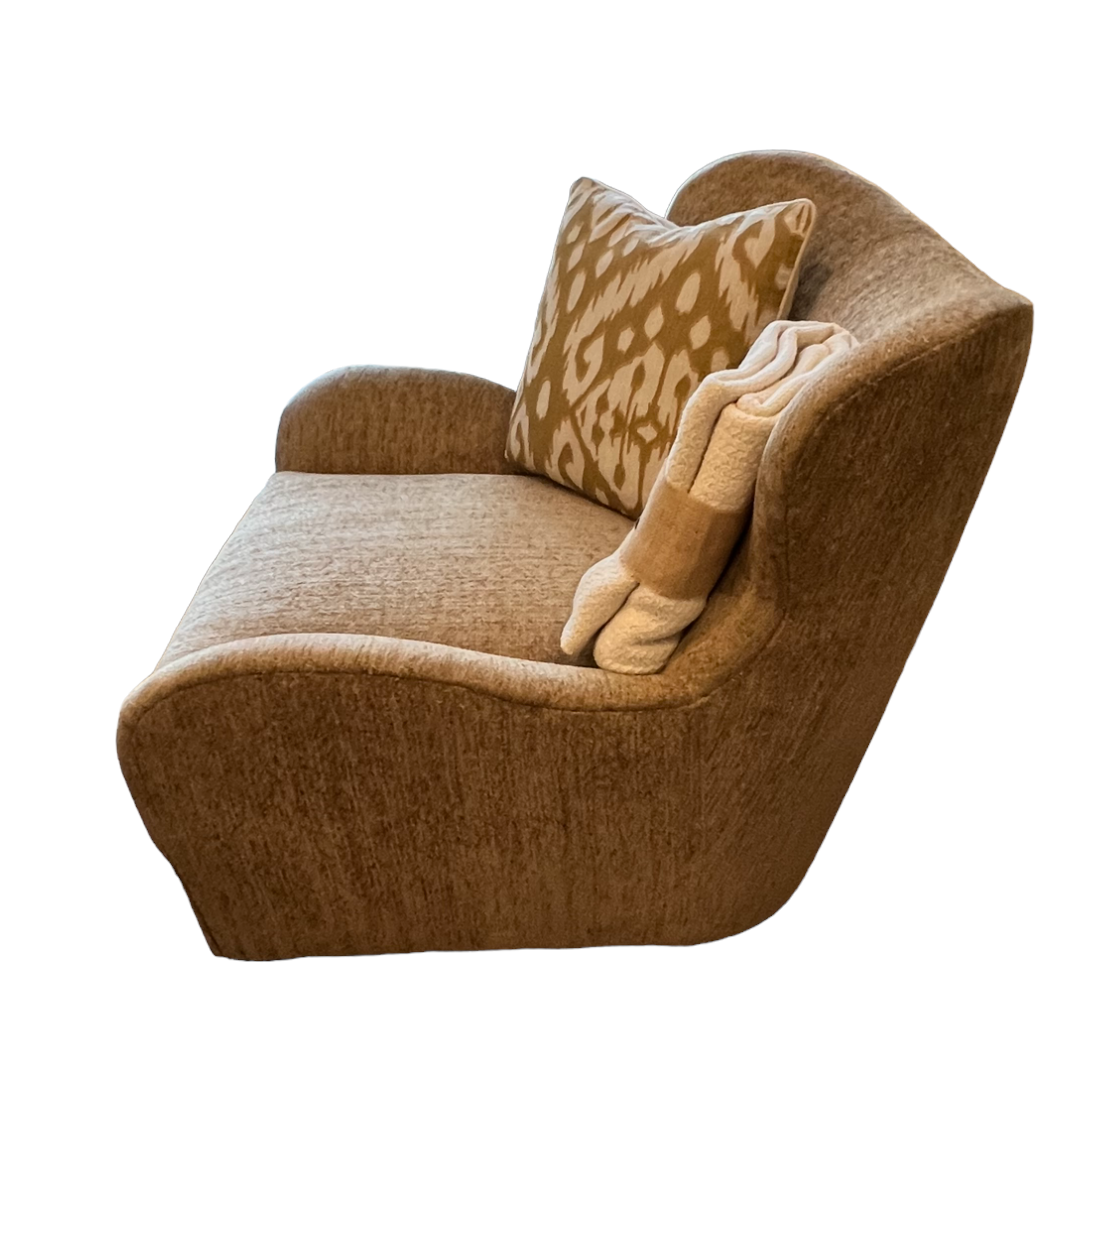 Norwalk Custom Zola Wingback Tan Upholstered Chair TH154-19